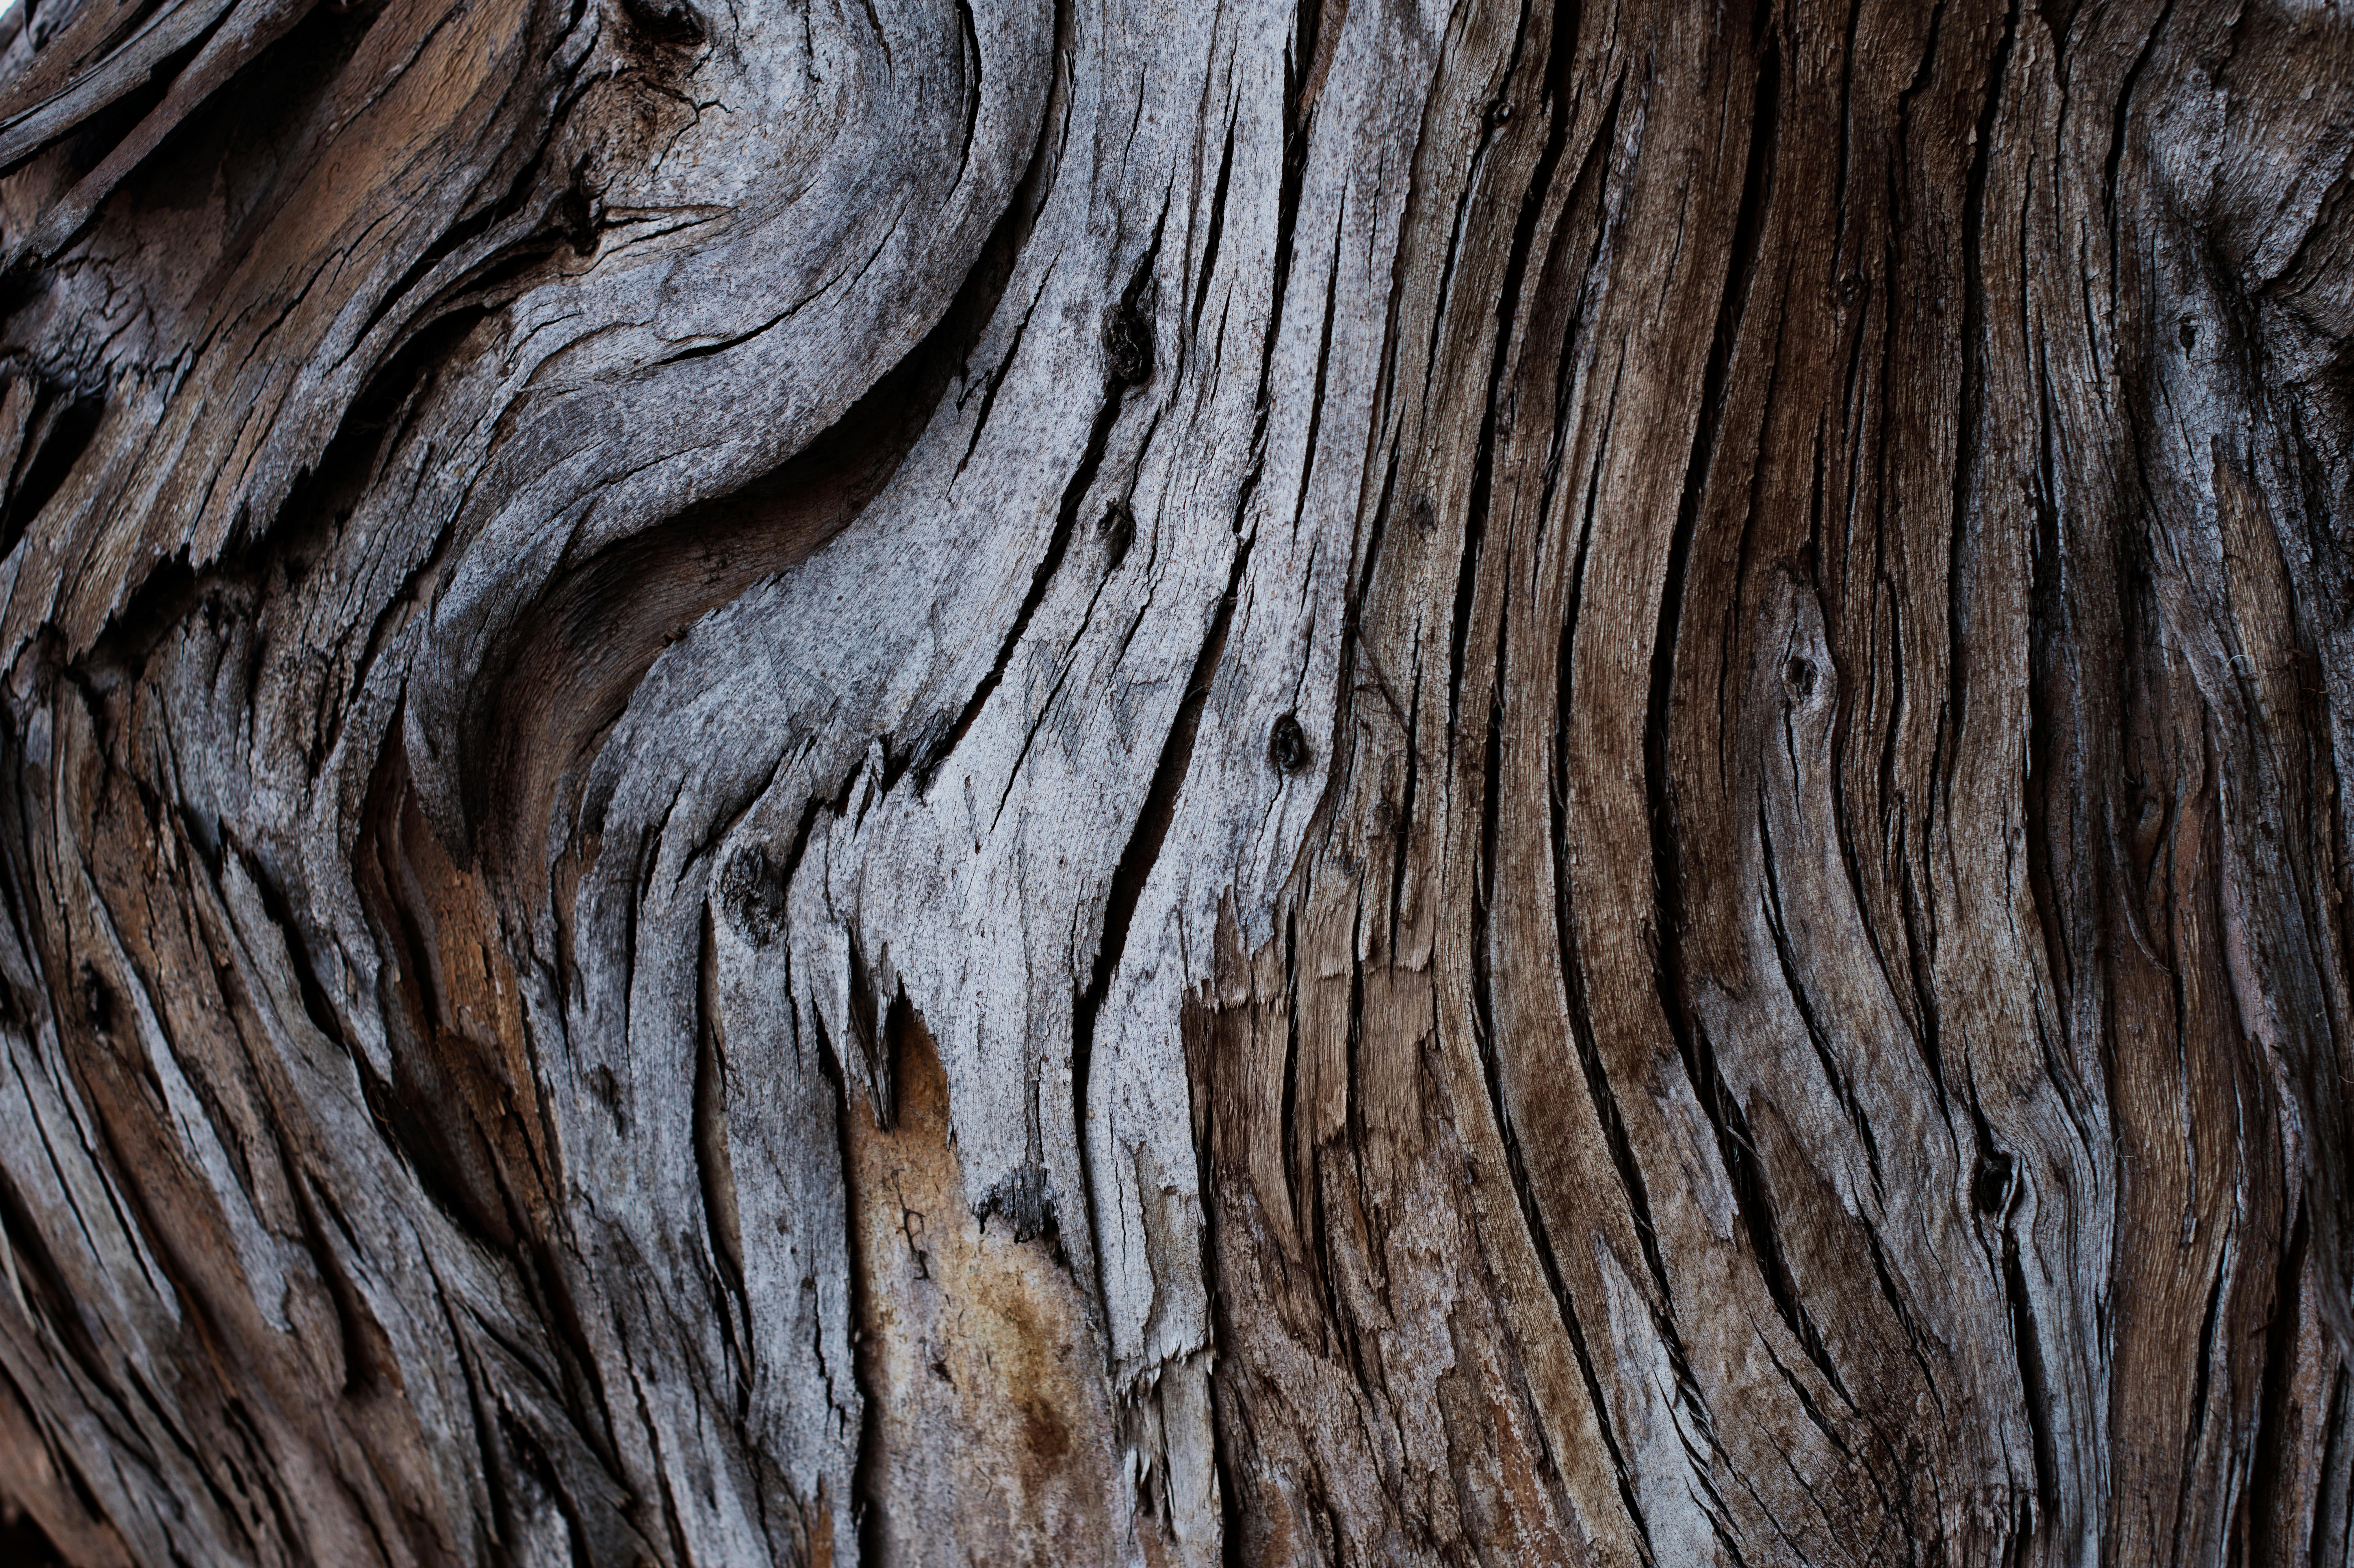 Hd Wallpaper Oak Tree Bark Wood  Free photo on Pixabay  Pixabay